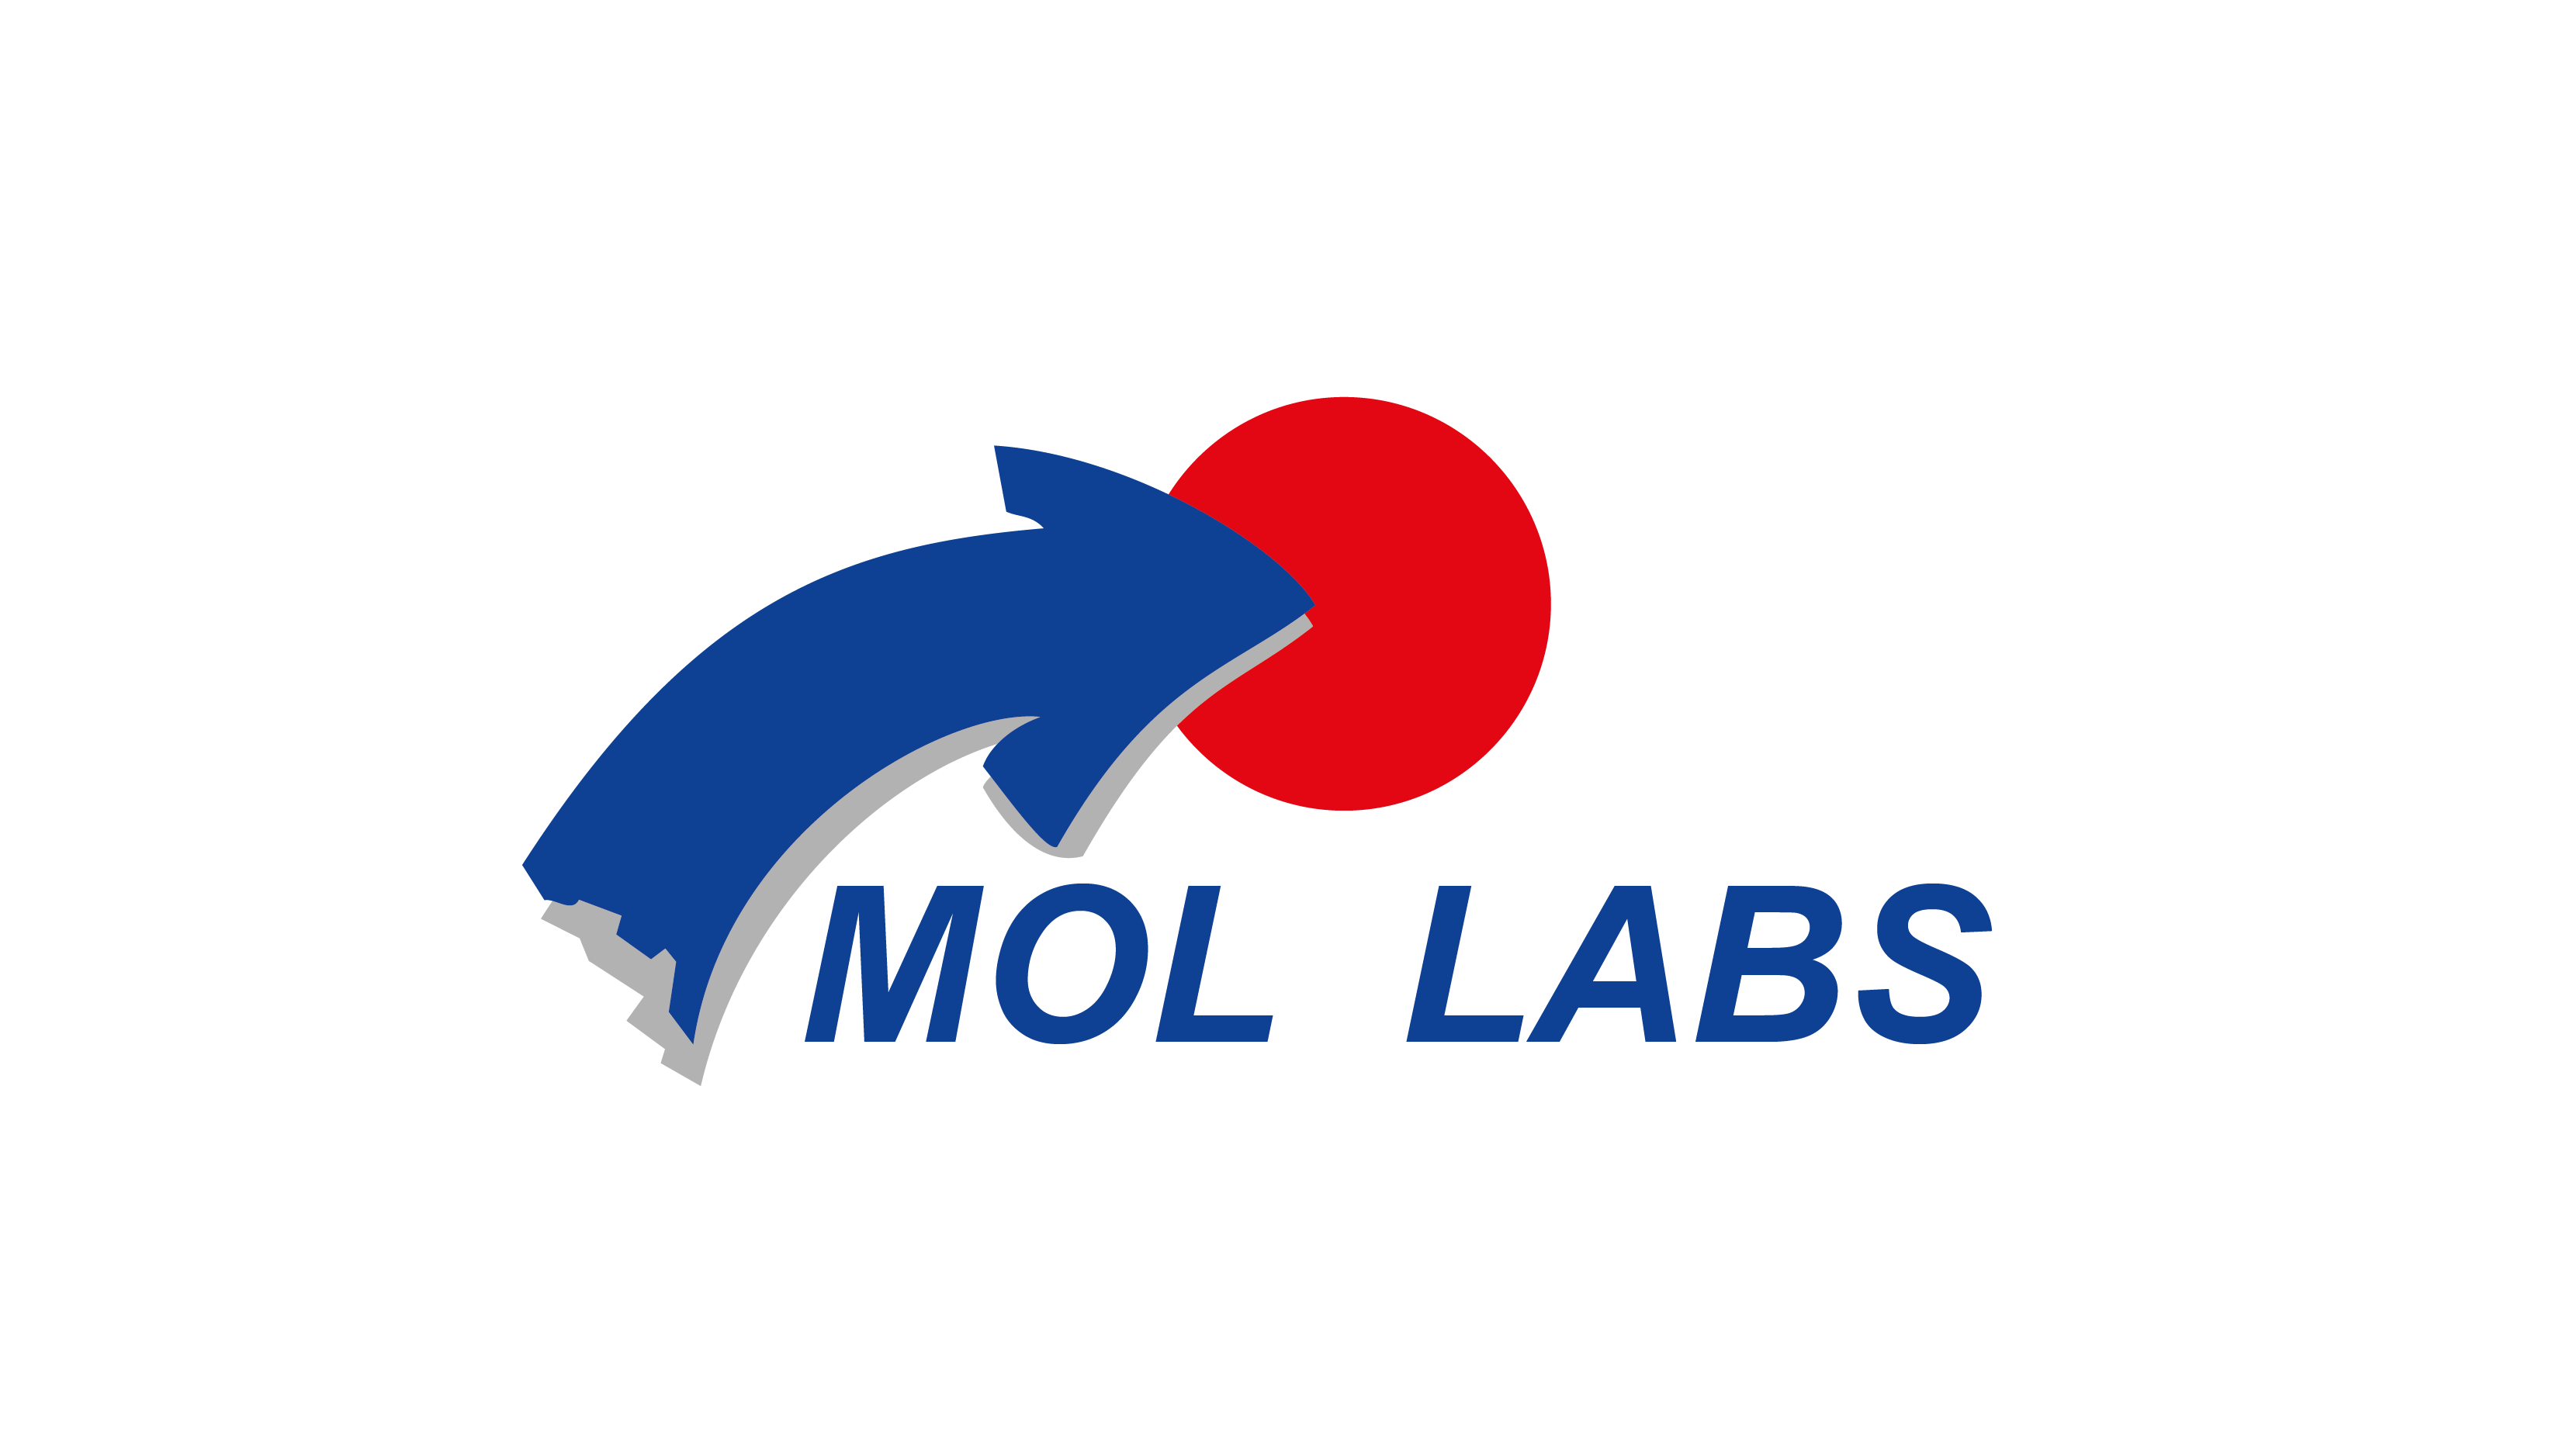 Mol Labs